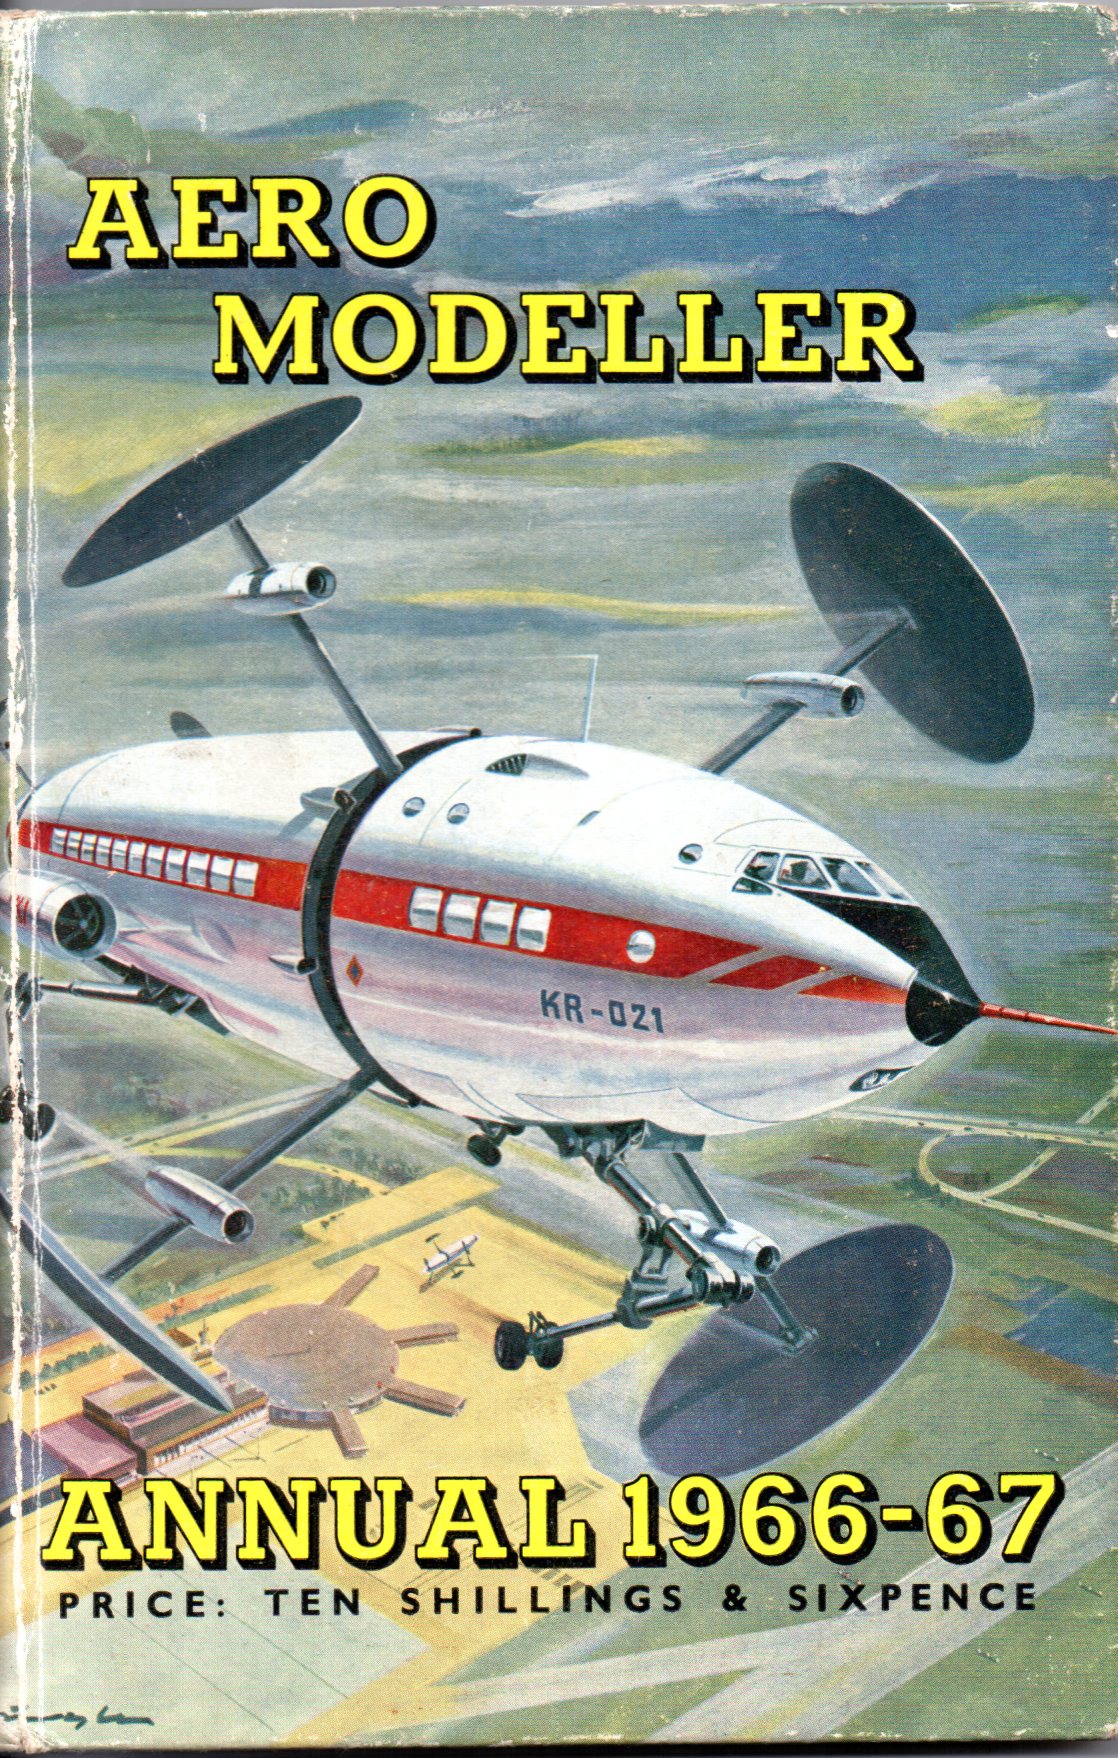 Aeromodeller Annual 1966-67 by DJ Laidlaw-Dickson and R G Moulton